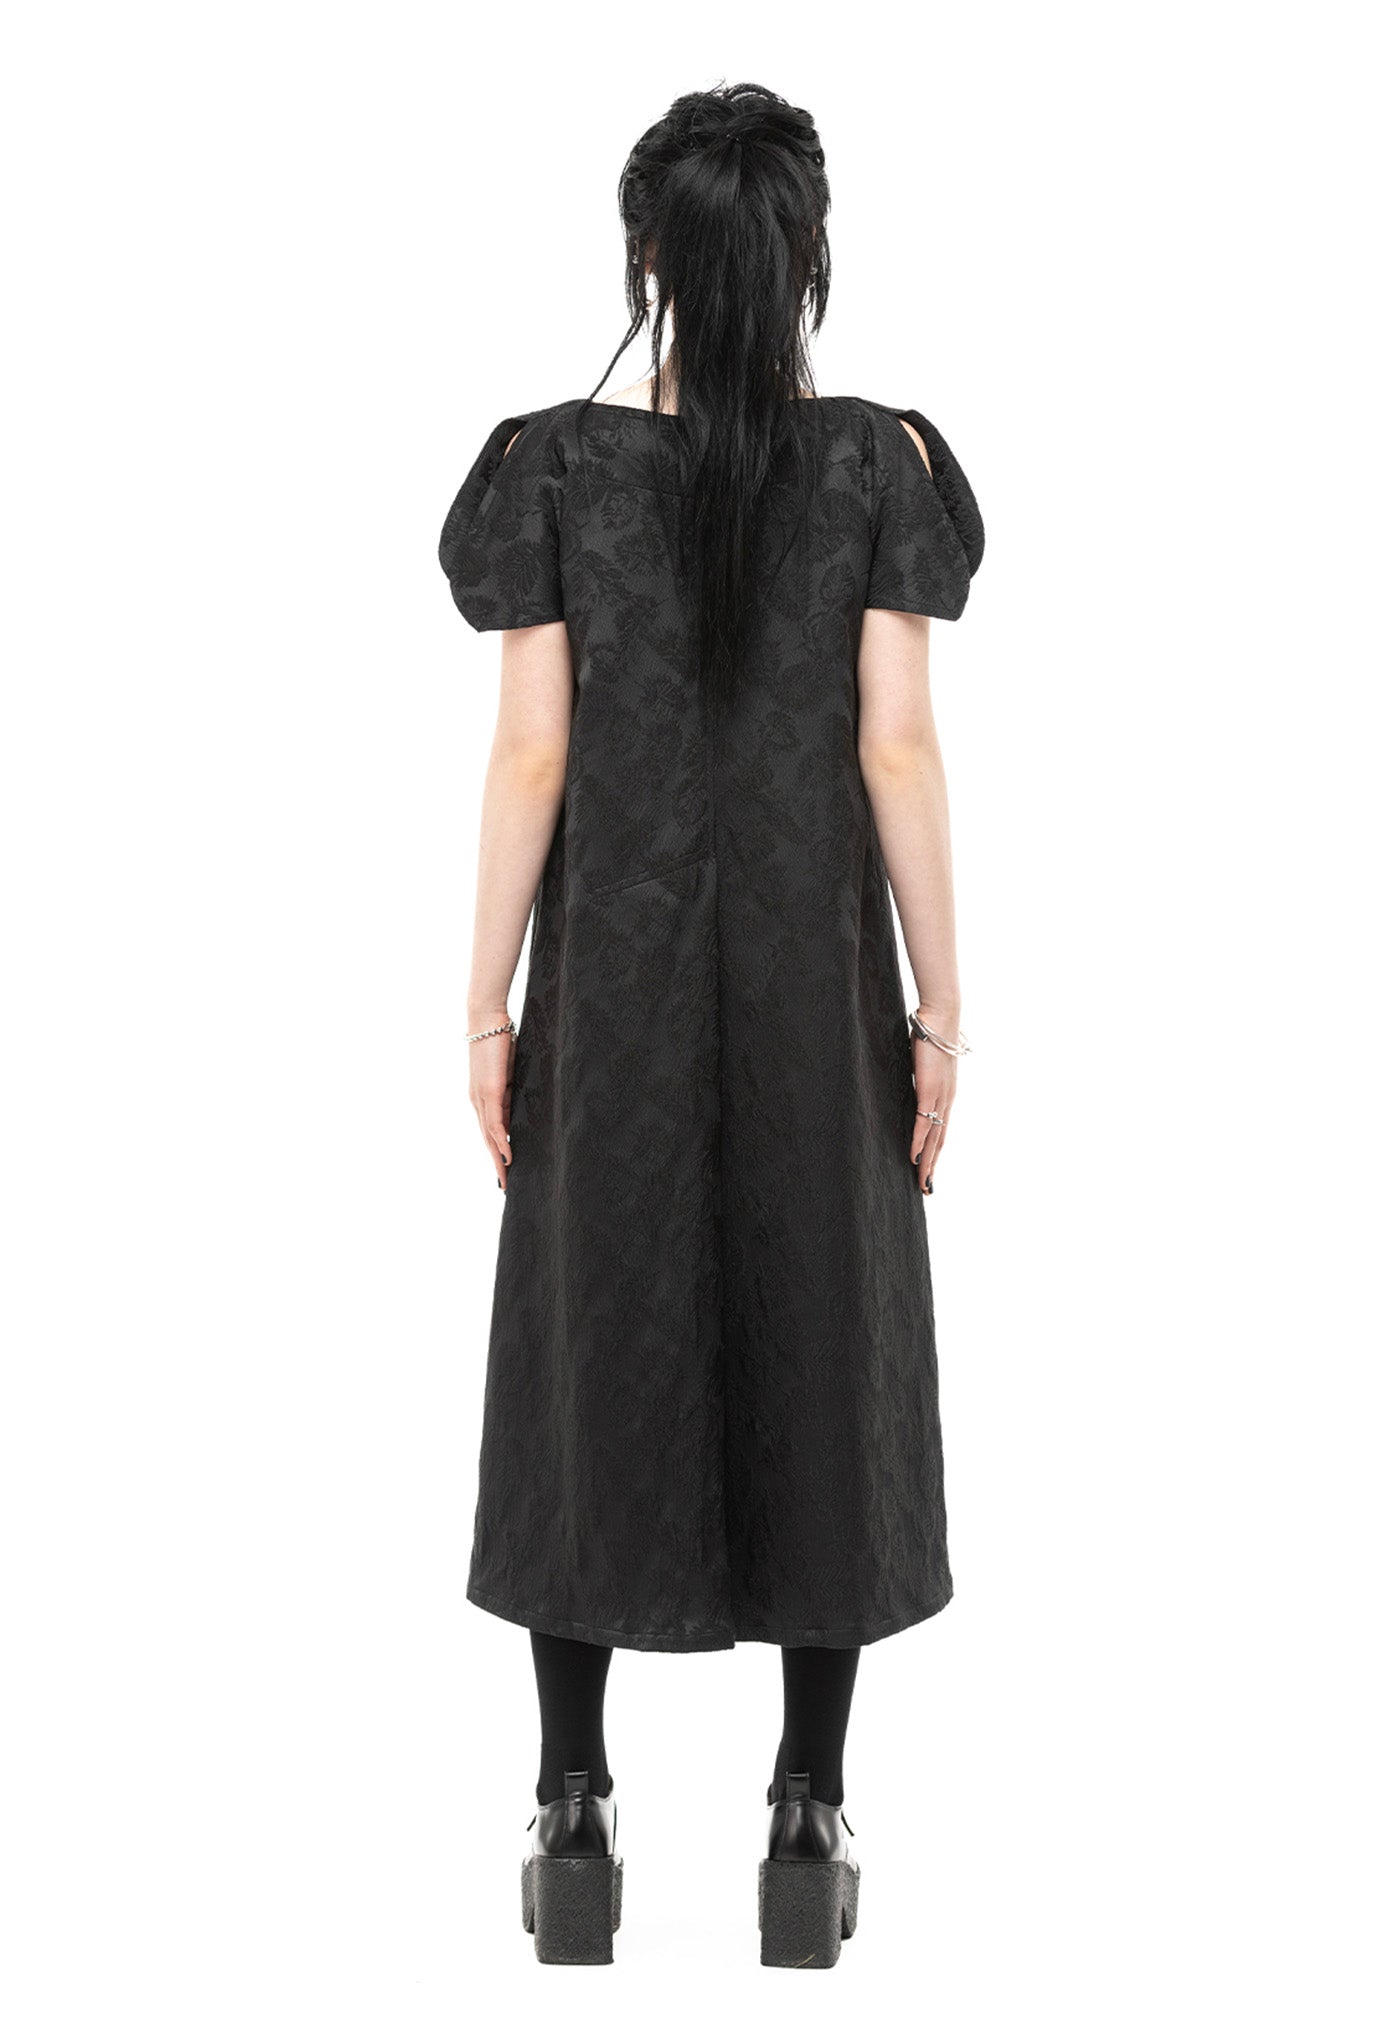 Maidens Dress - Black Leaf sold by Angel Divine